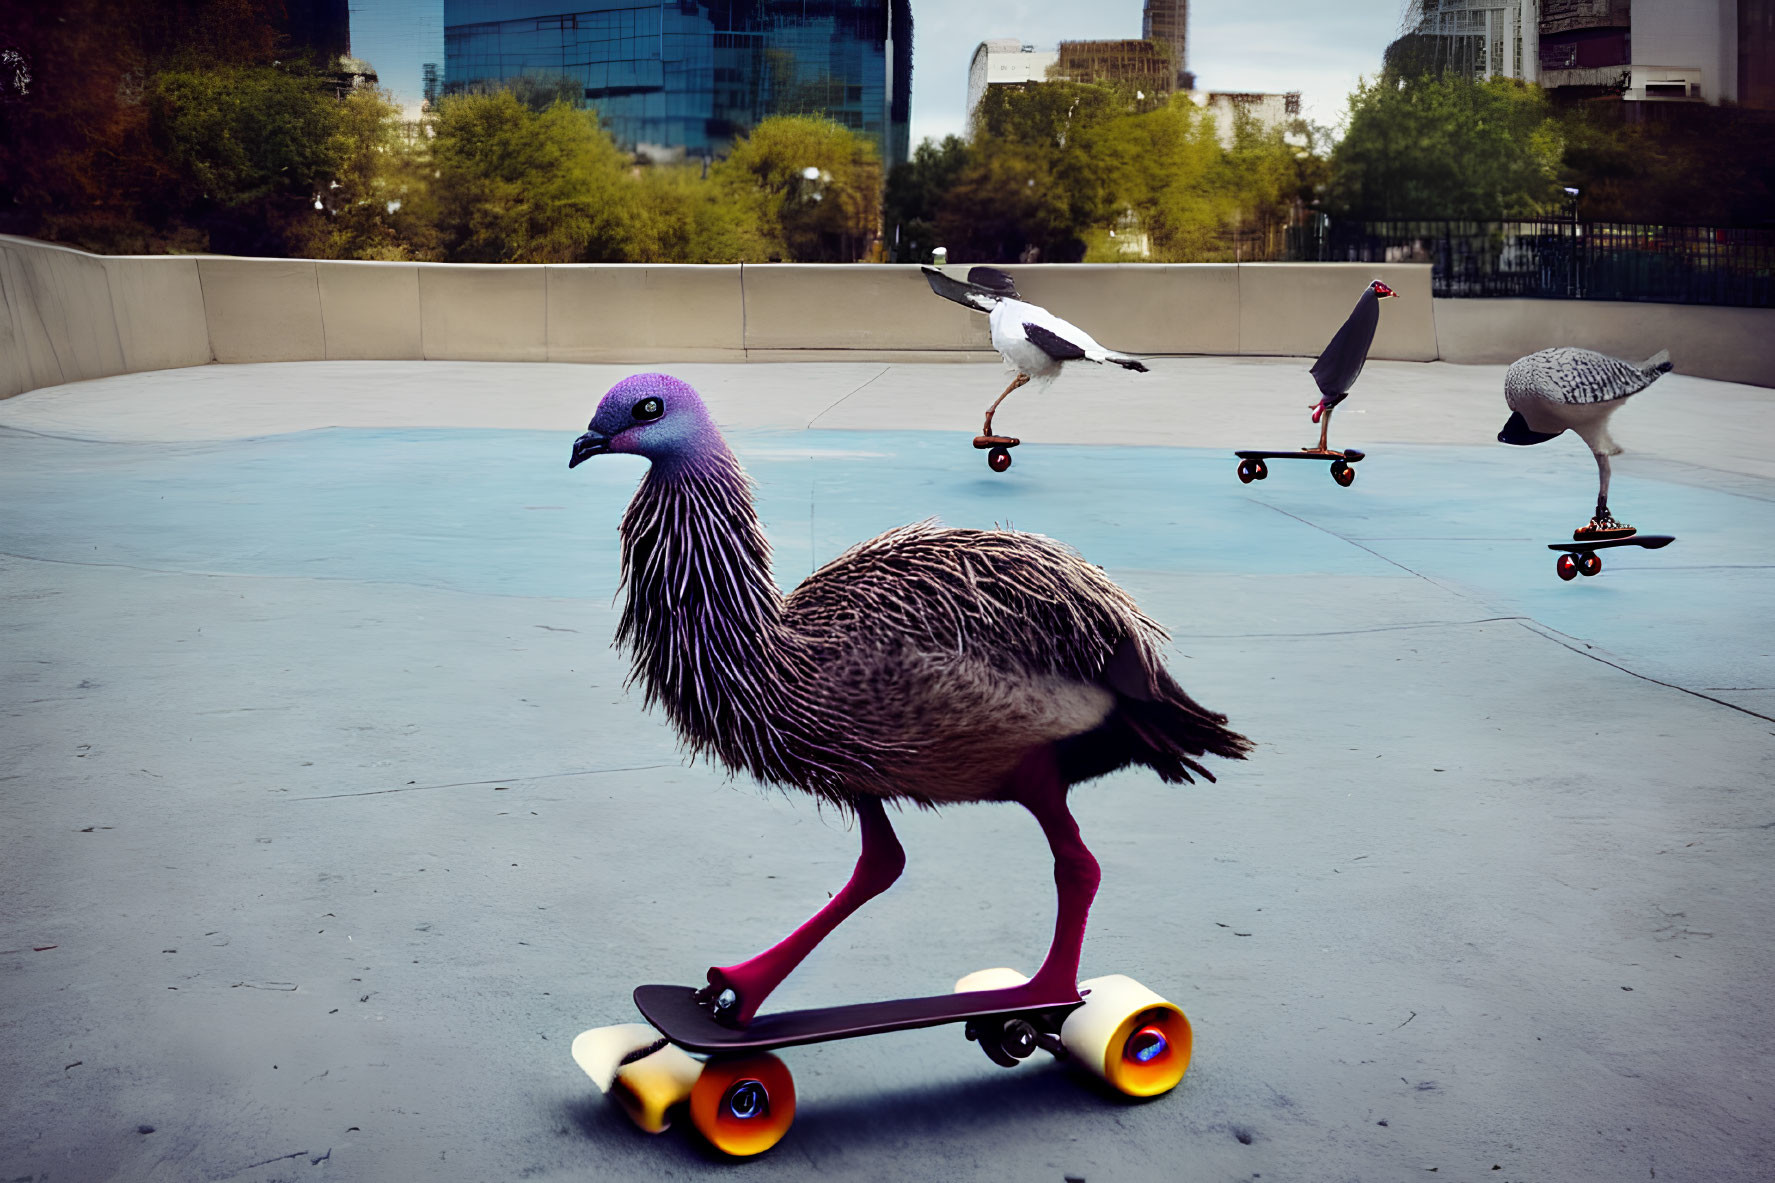 Birds with Pigeon Heads Skateboarding in Urban Park